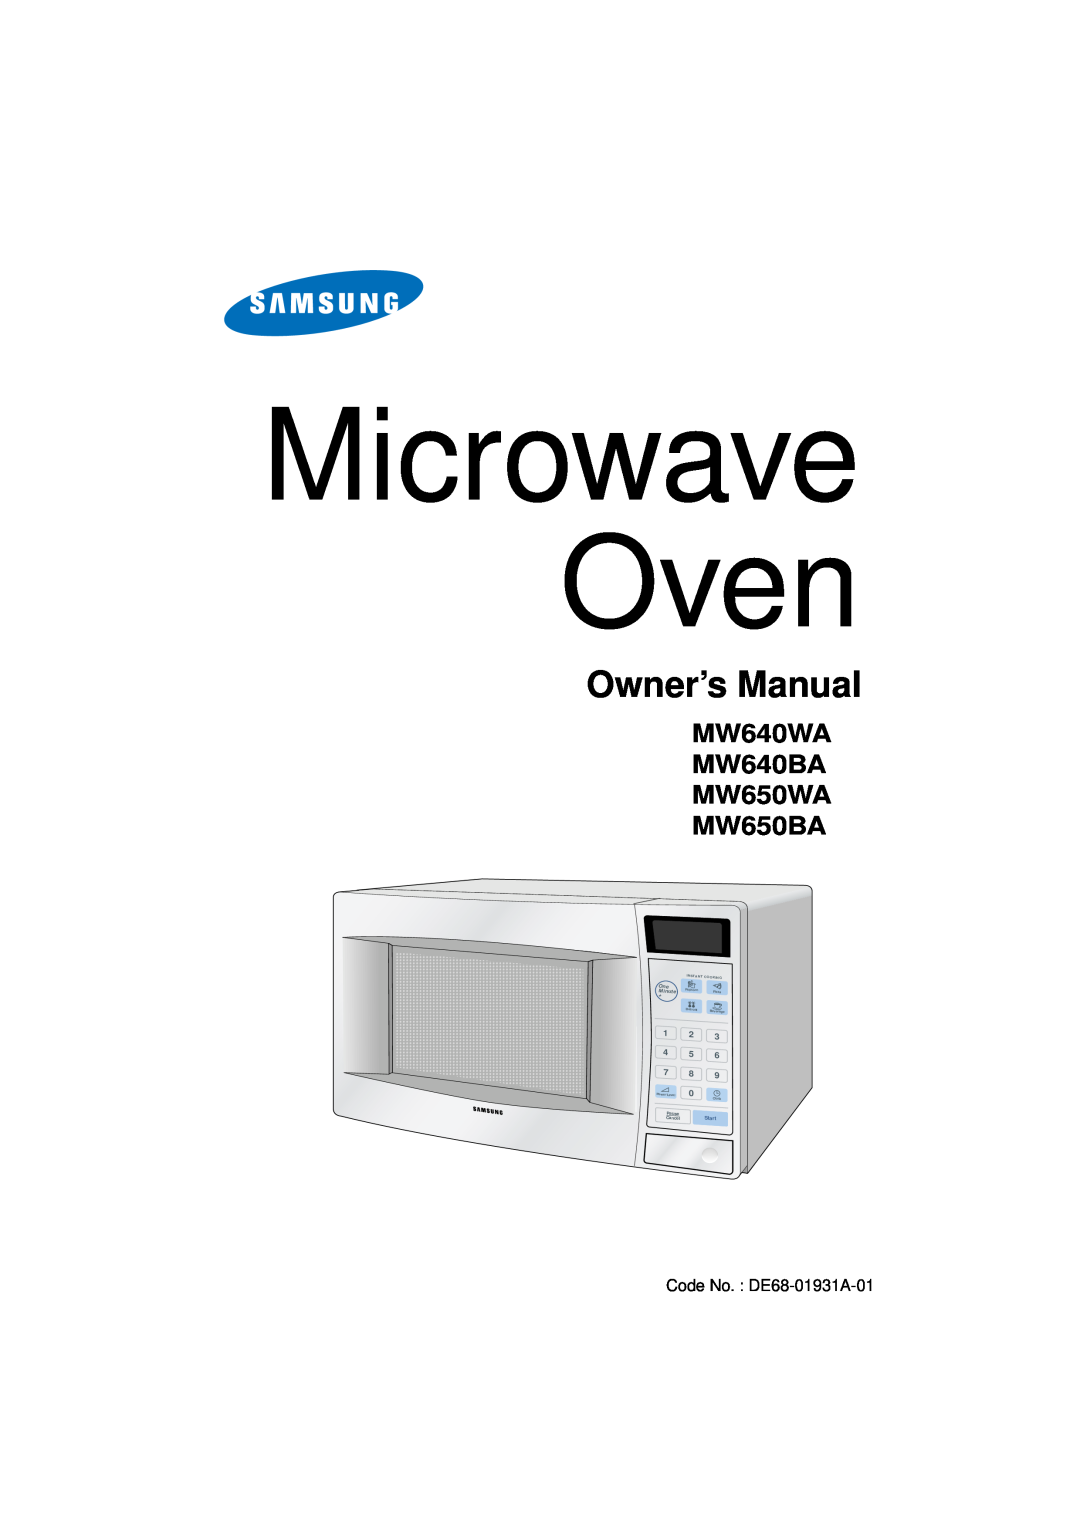 Samsung DE68-01931A-01 manual MW640WA MW640BA MW650WA MW650BA, Microwave Oven, Owner’s Manual, One Minute +, Start, Pizza 